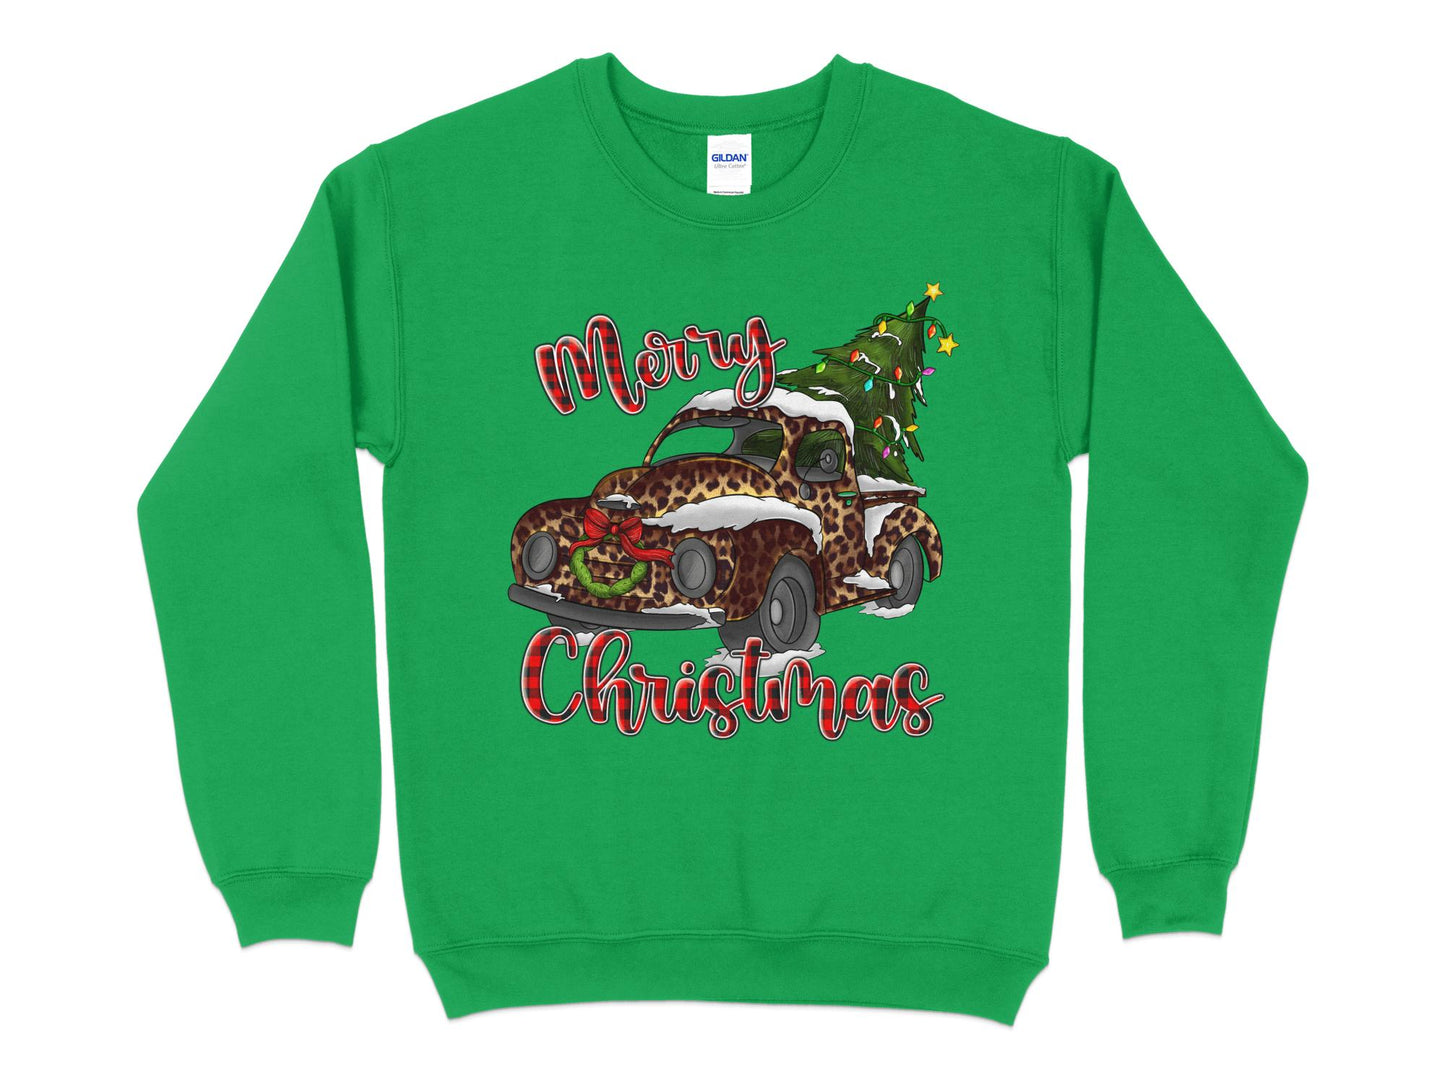 Merry Christmas Leopard Print Truck Sweatshirt, Christmas Sweater for Women, Christmas Gift for Women, Holiday Sweater, Xmas Shirt - Mardonyx Sweatshirt S / Irish Green